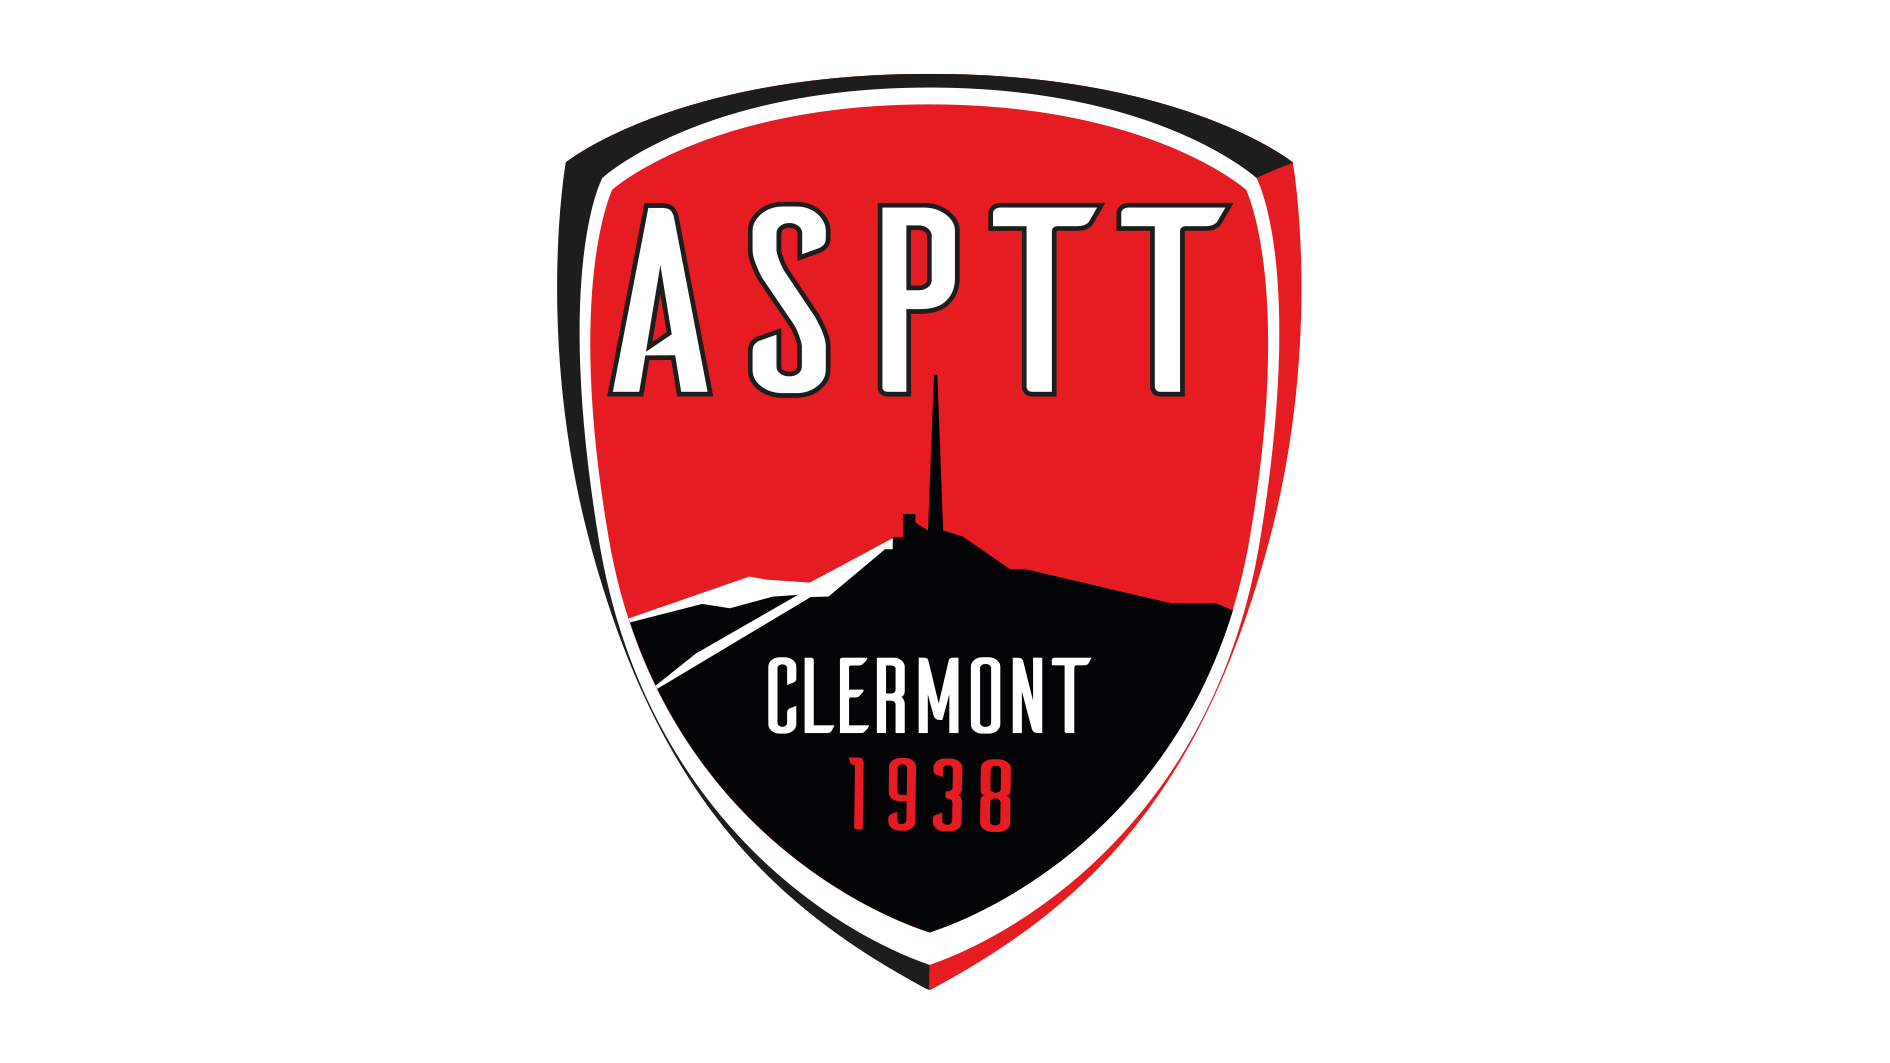 Asptt Clermont logo png